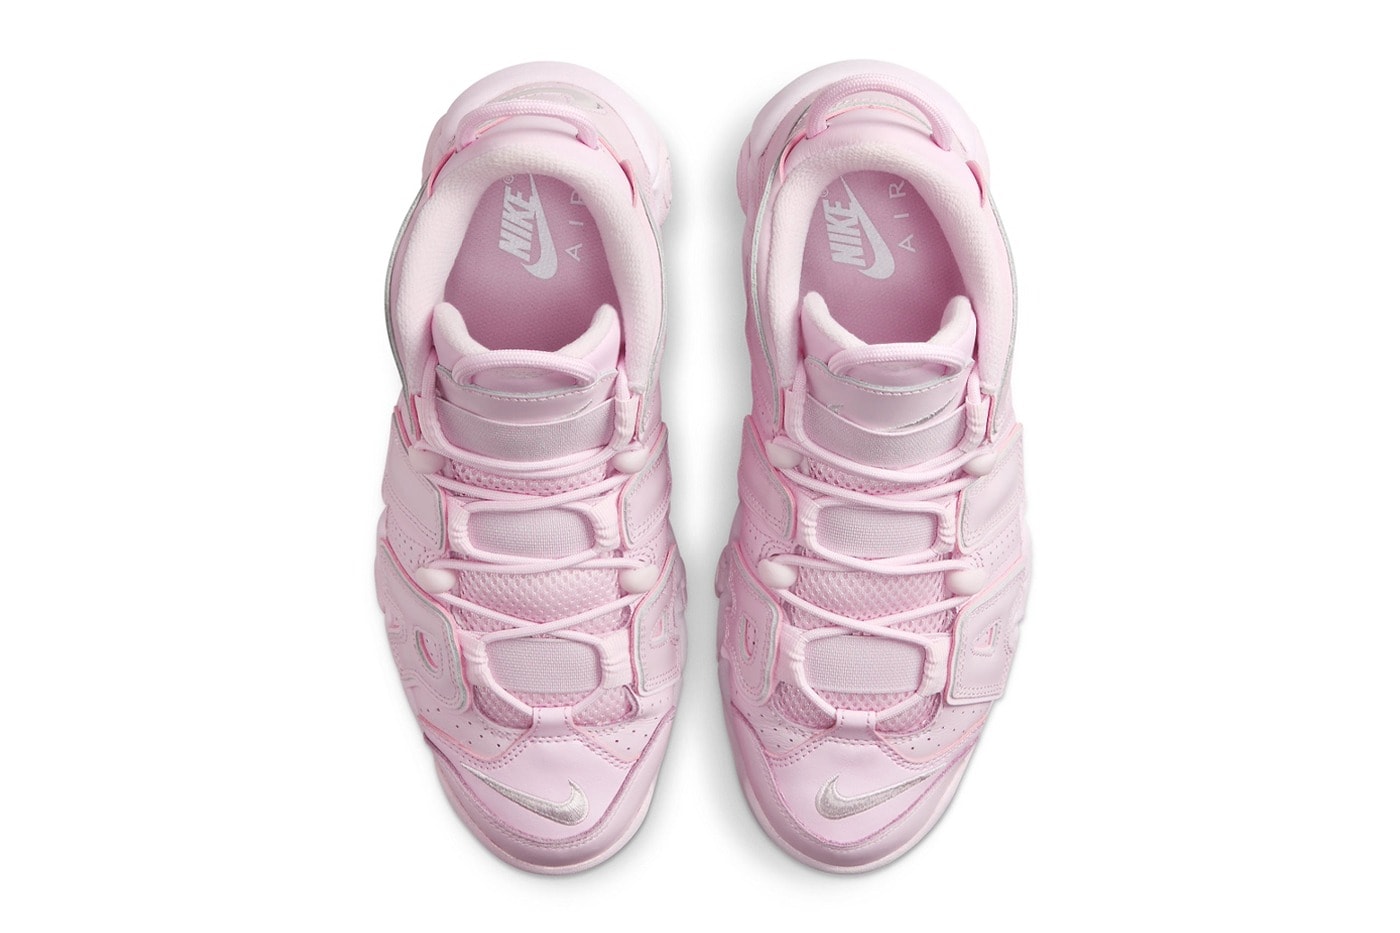 近賞 Nike Air More Uptempo 全新配色「Pink Foam」官方圖輯